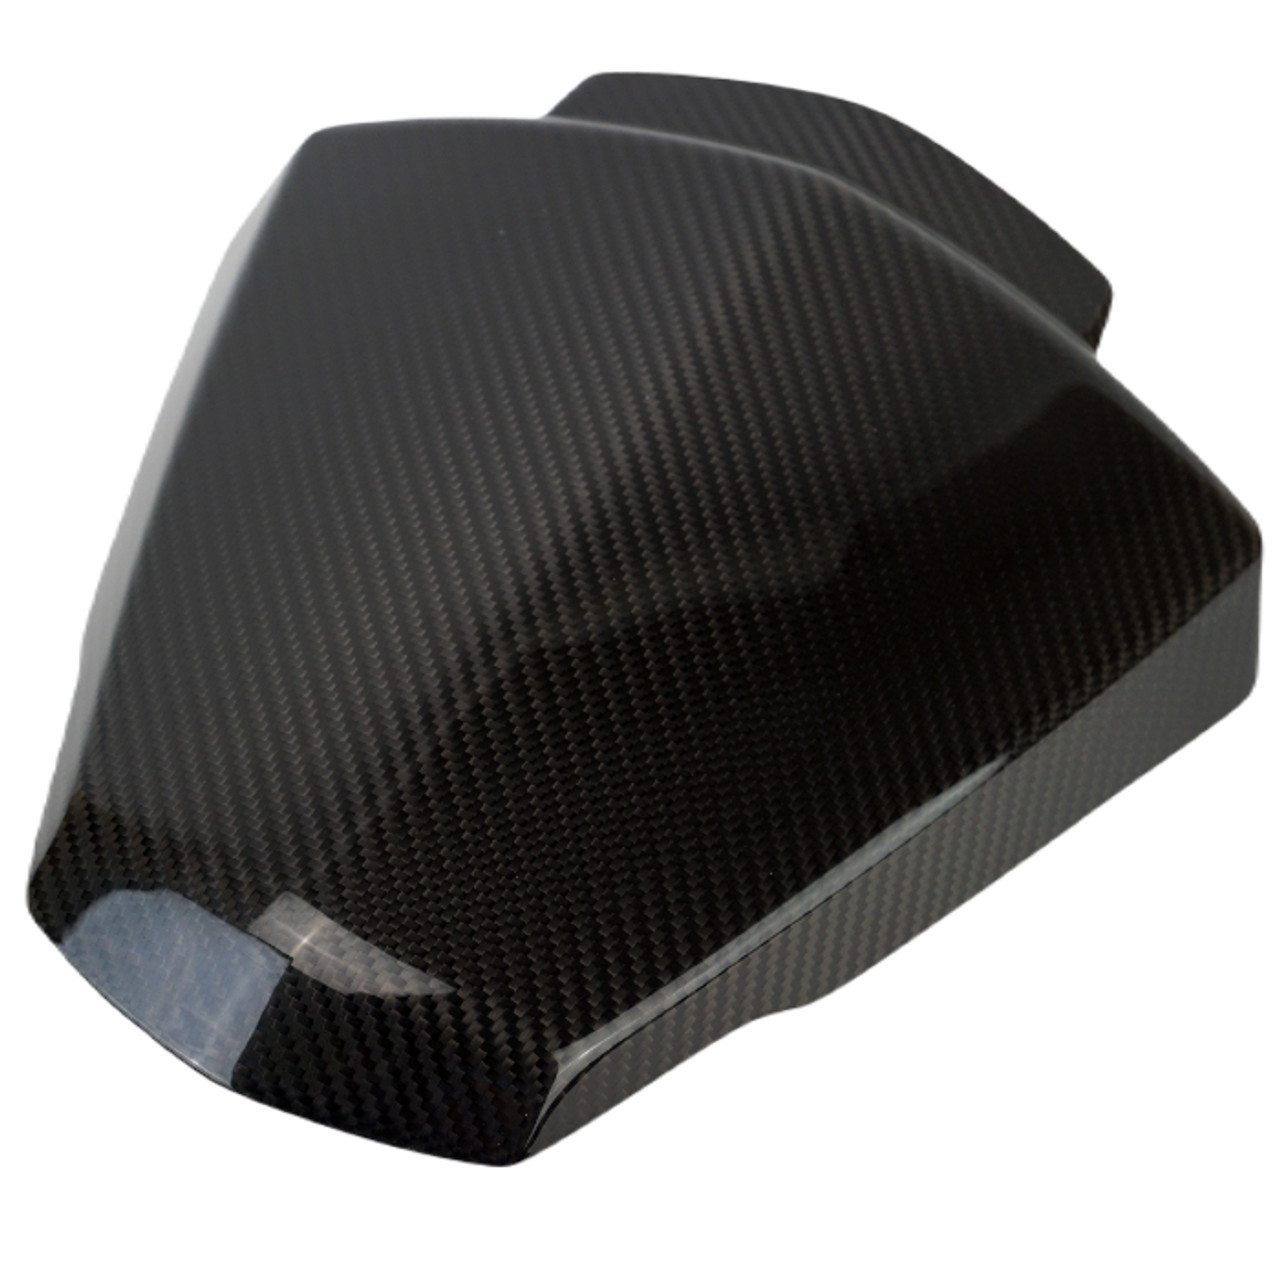 Seat Cowl in Glossy Twill Weave Carbon Fiber for KTM Duke 390 2011-2016